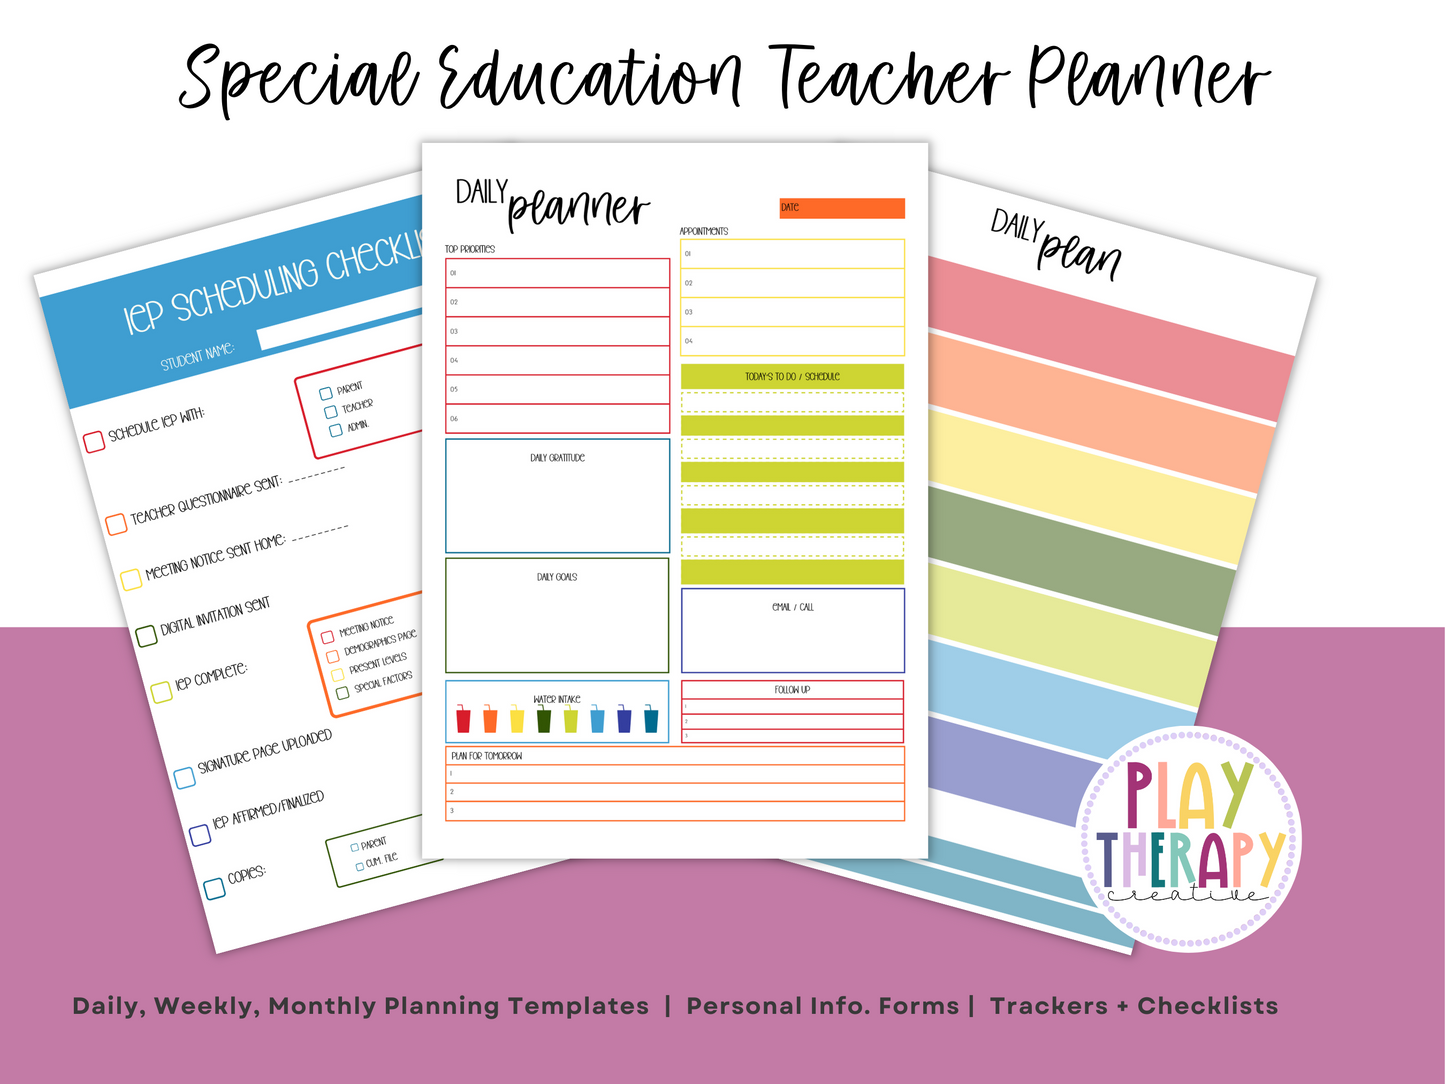 SpEd Teacher Printable Planner - Bright Floral Theme